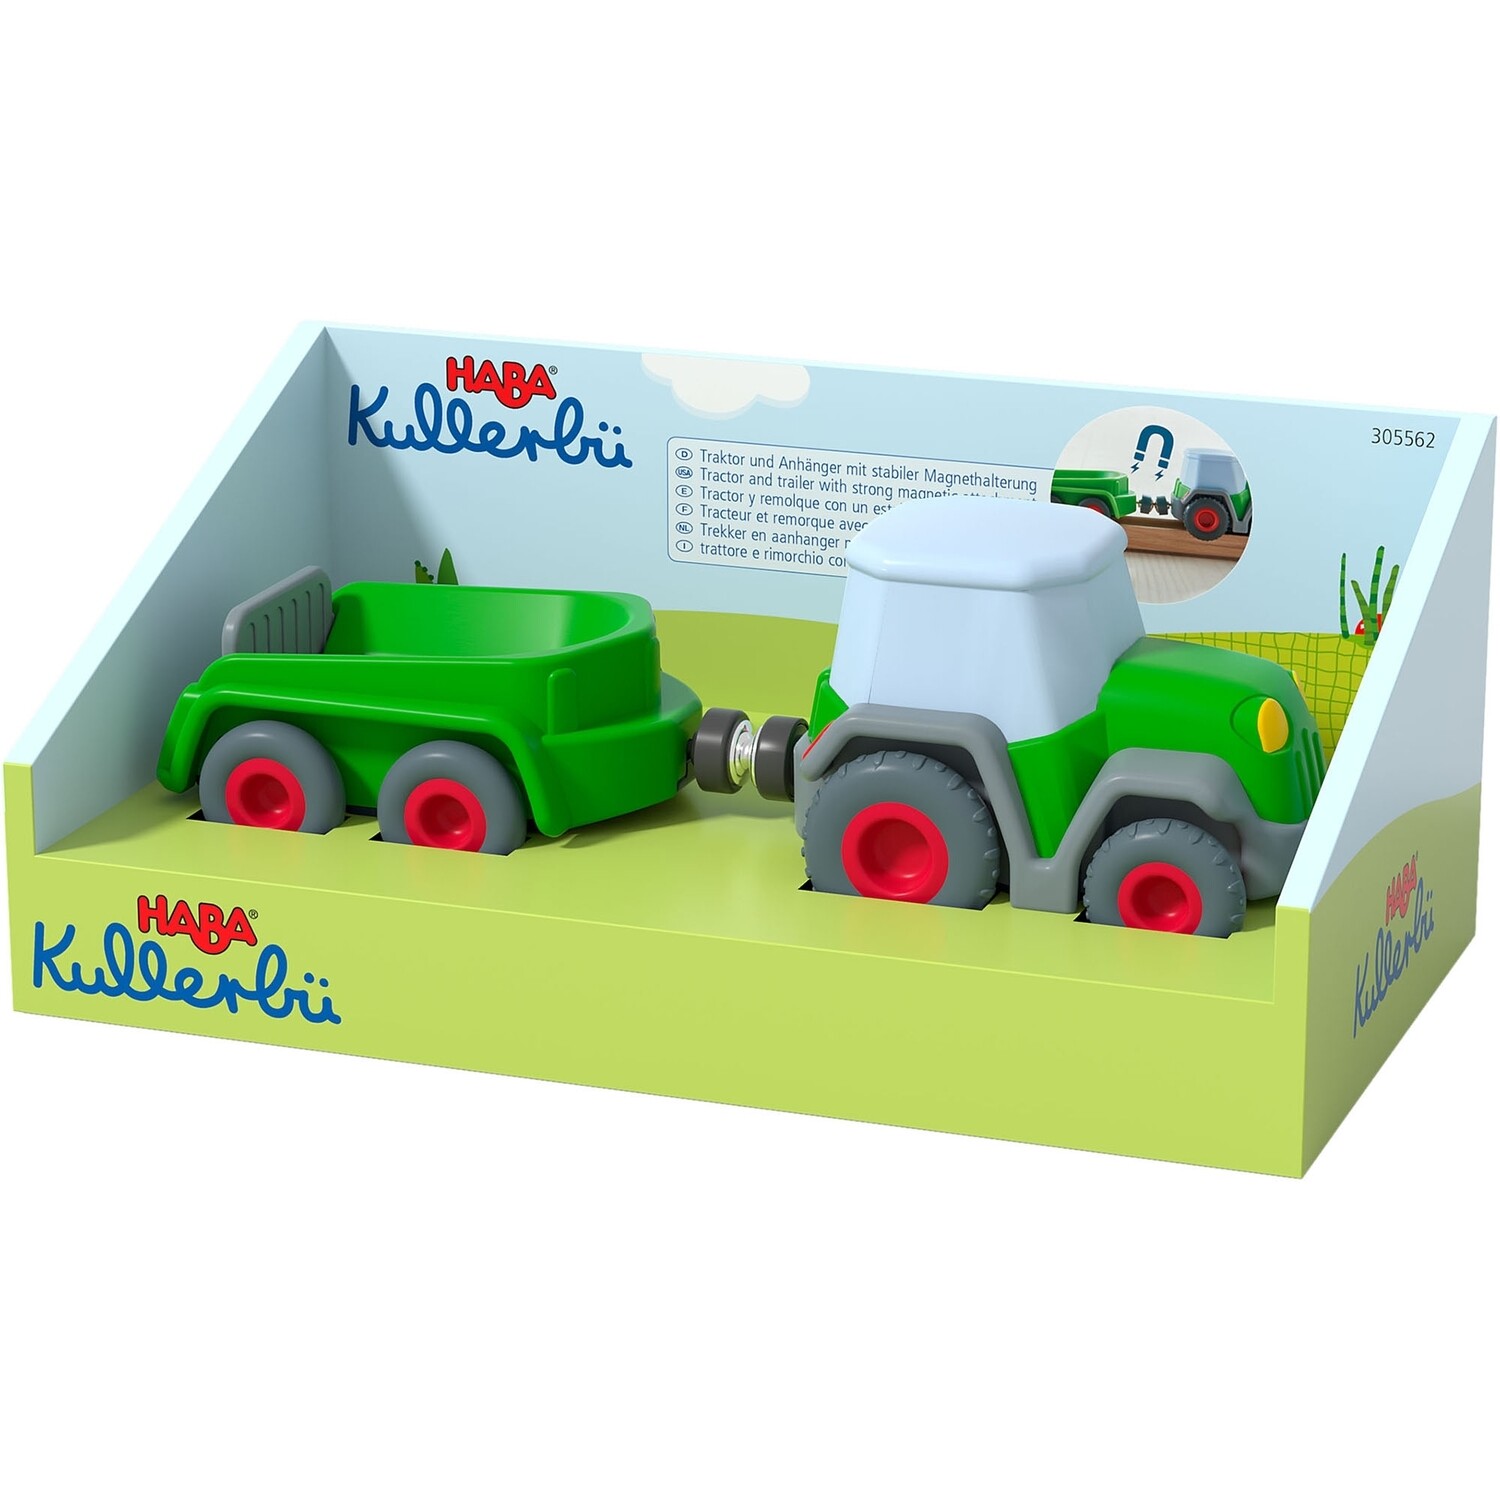 Haba KullerBu-Tractor With Trailer